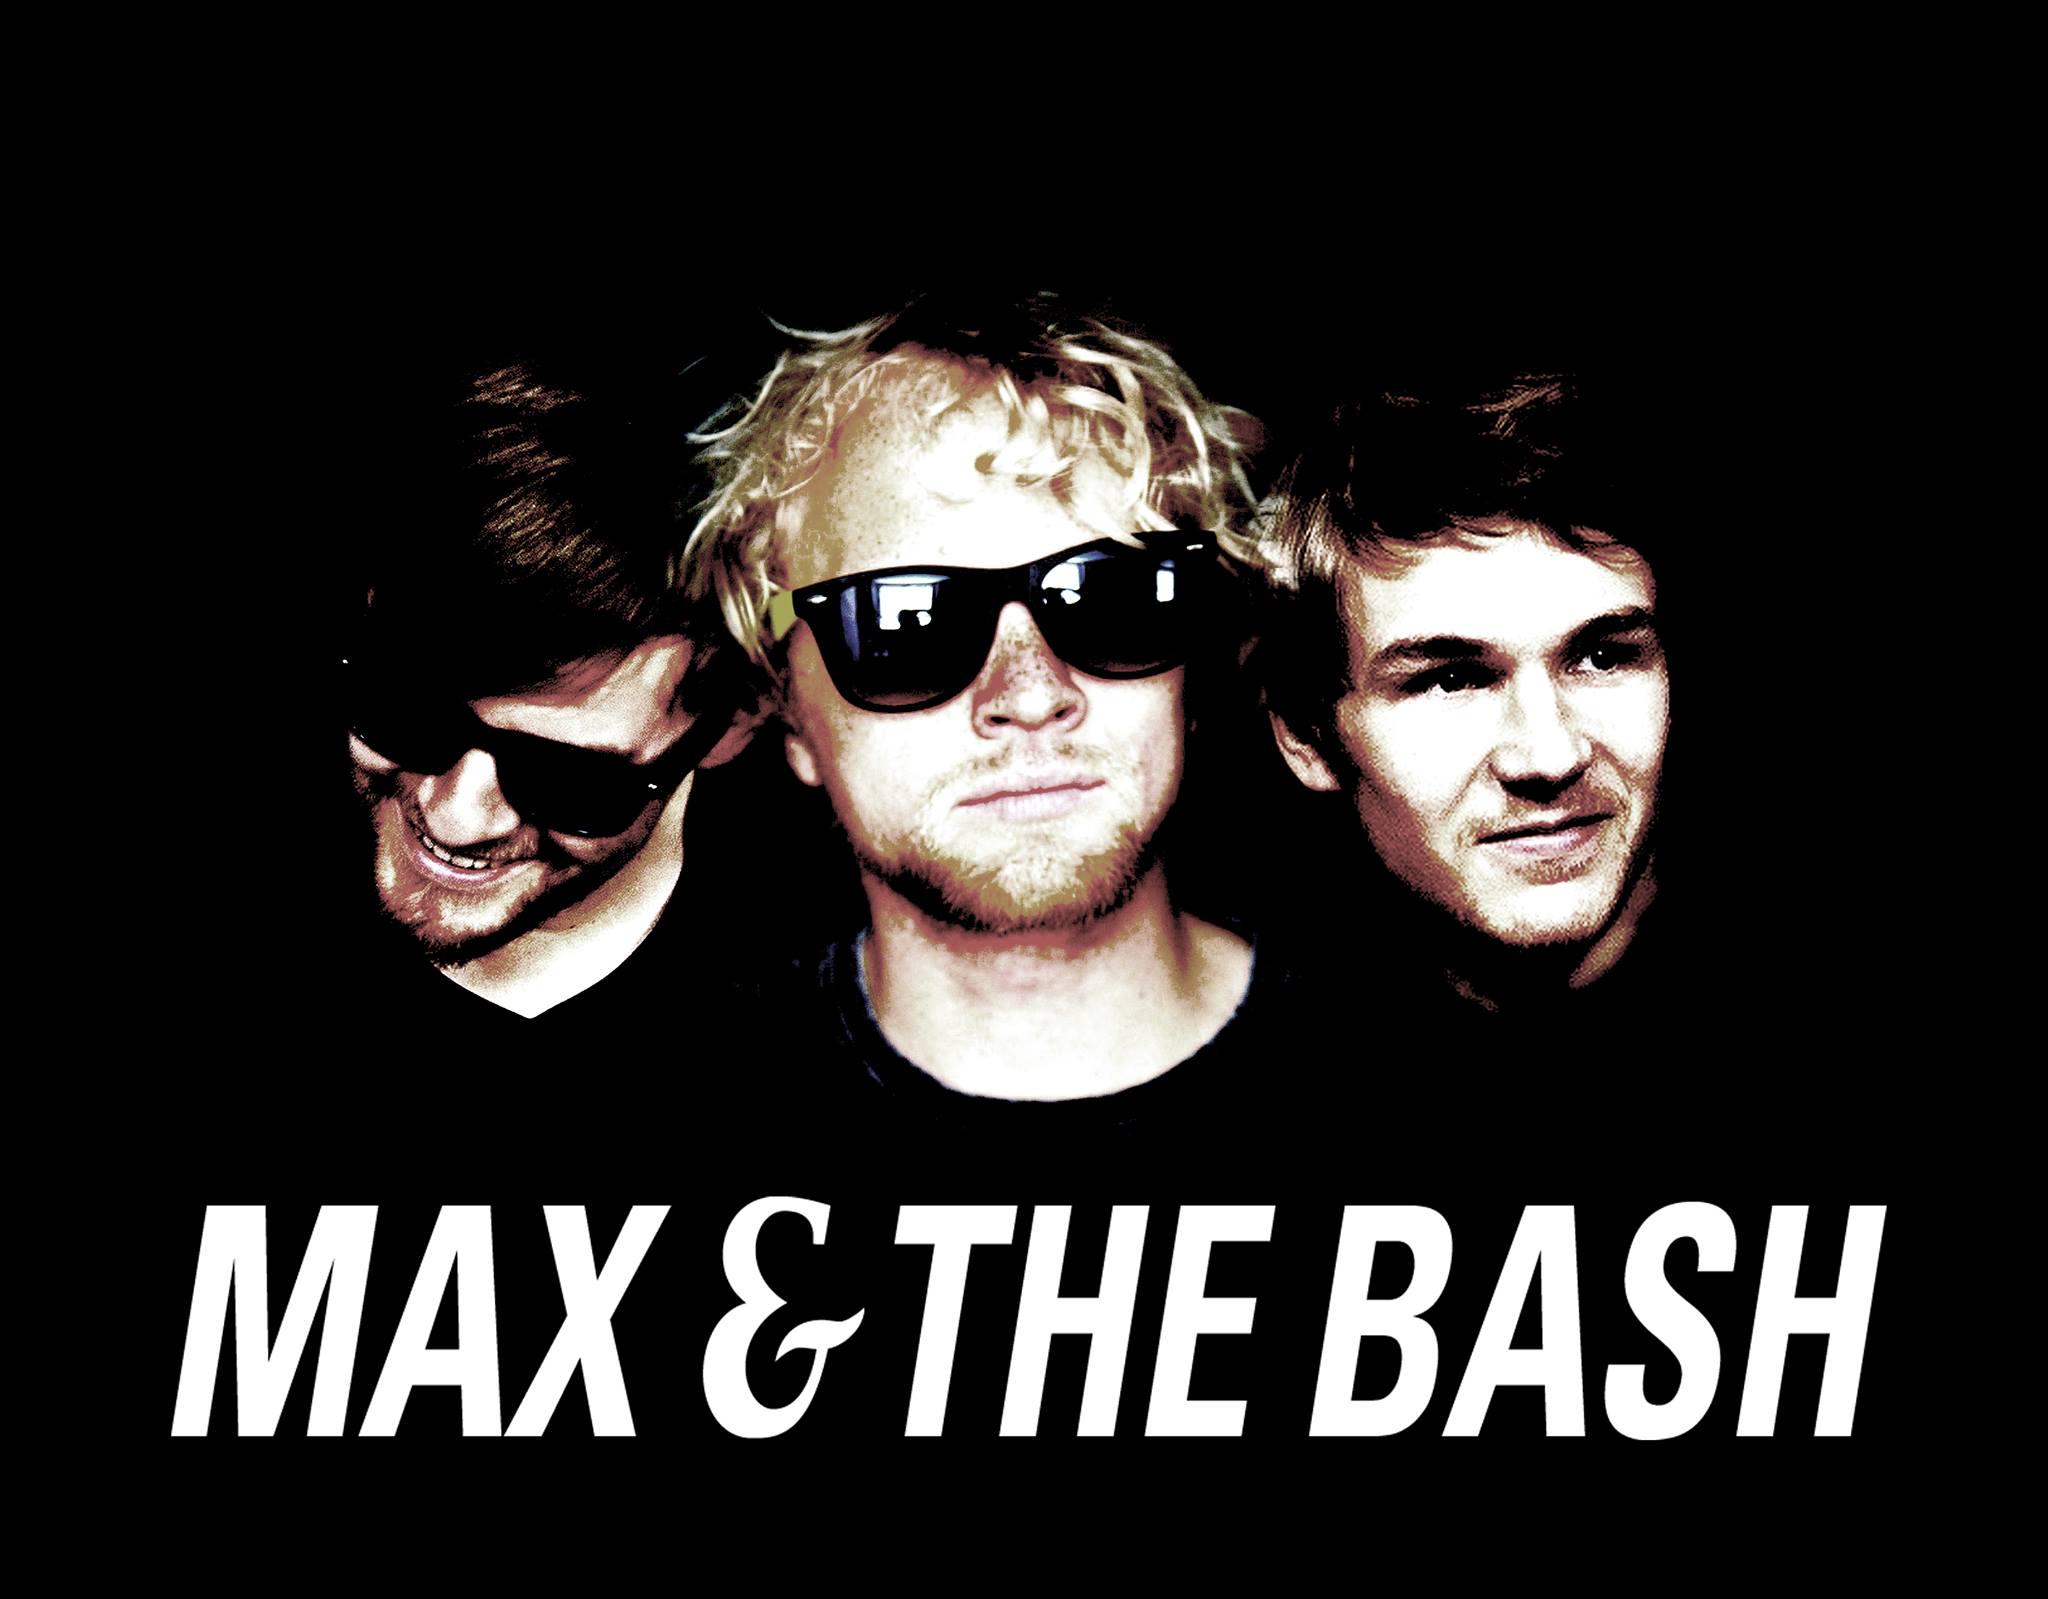 Max & the BASH